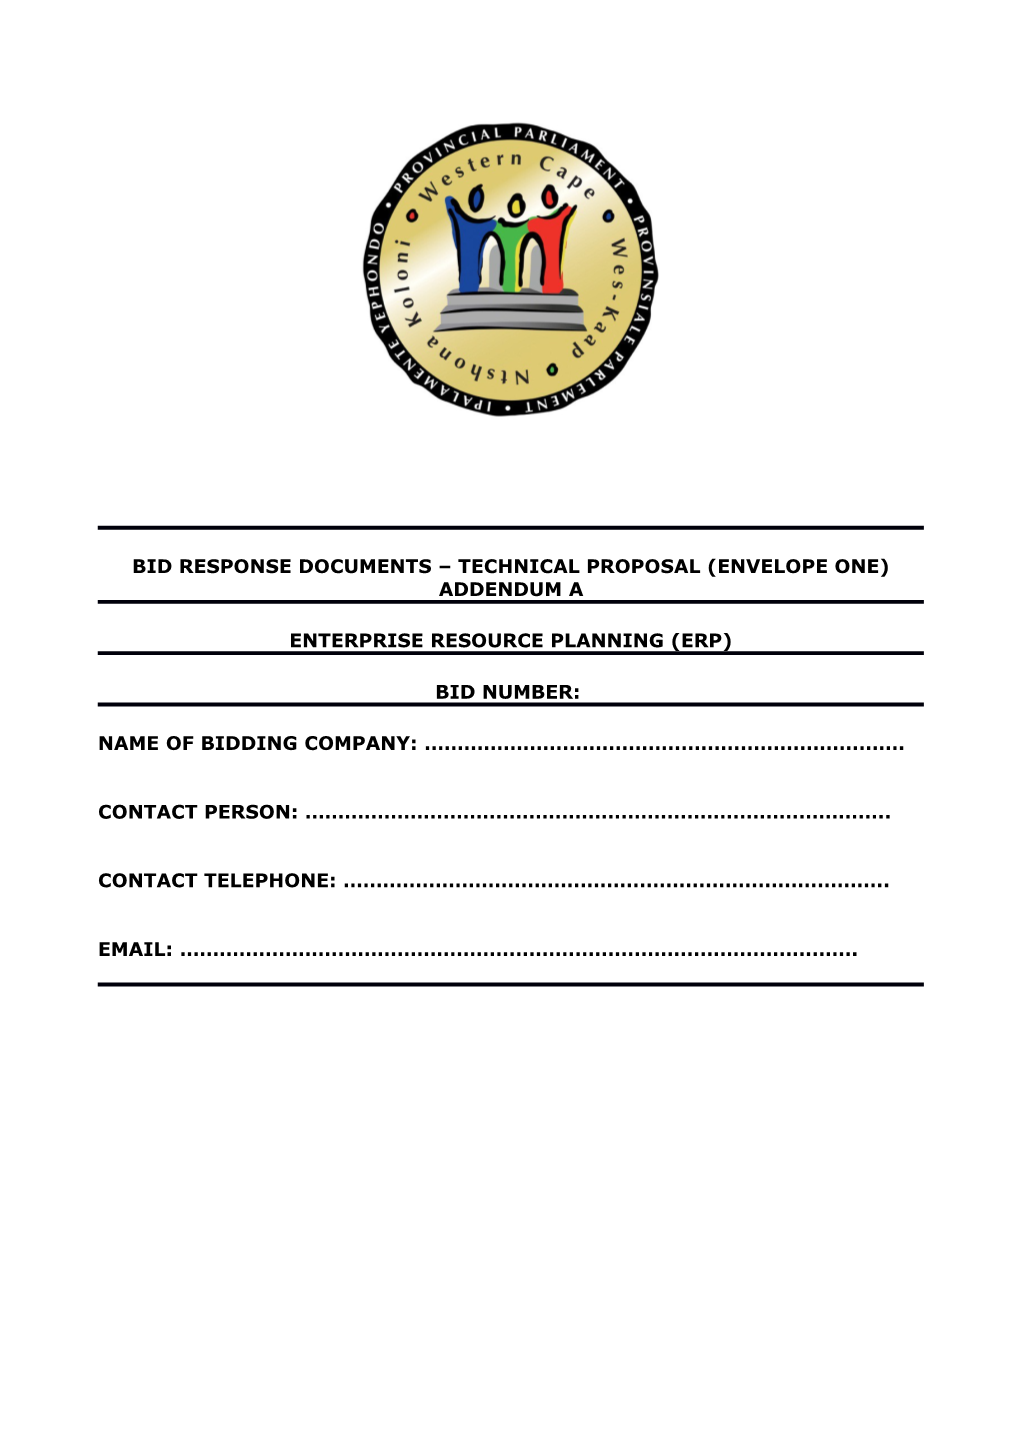 Bid Response Documents Technical Proposal (Envelope One)